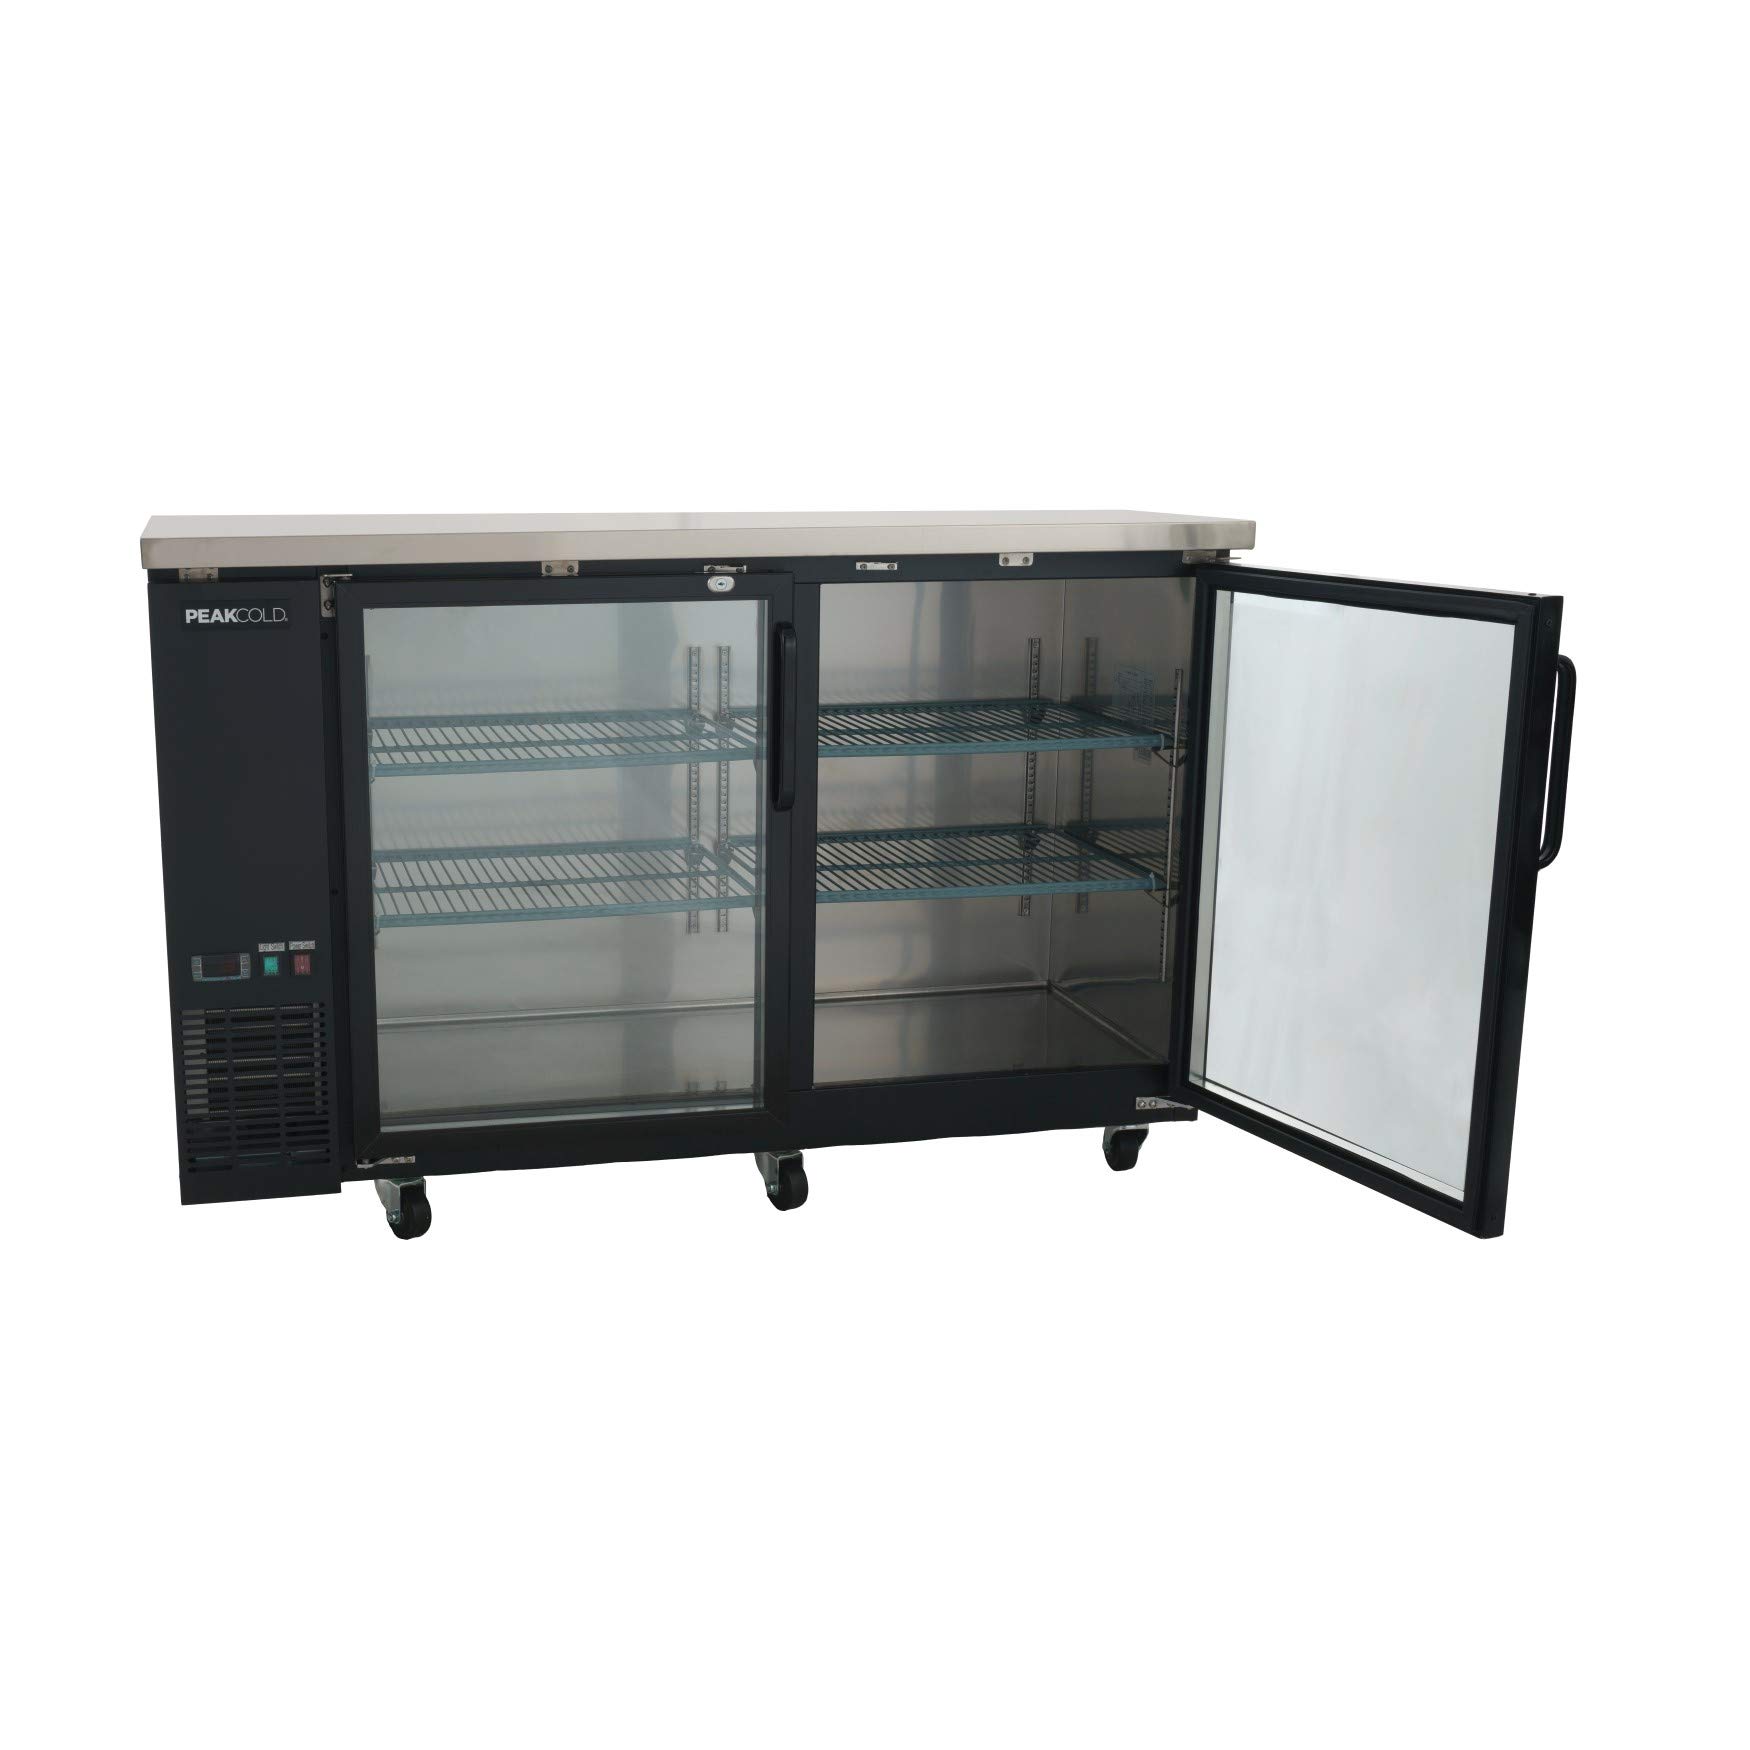 Peak Cold 60" Glass Door Back Bar Cooler; Counter Height Refrigerator with 2 Glass Doors